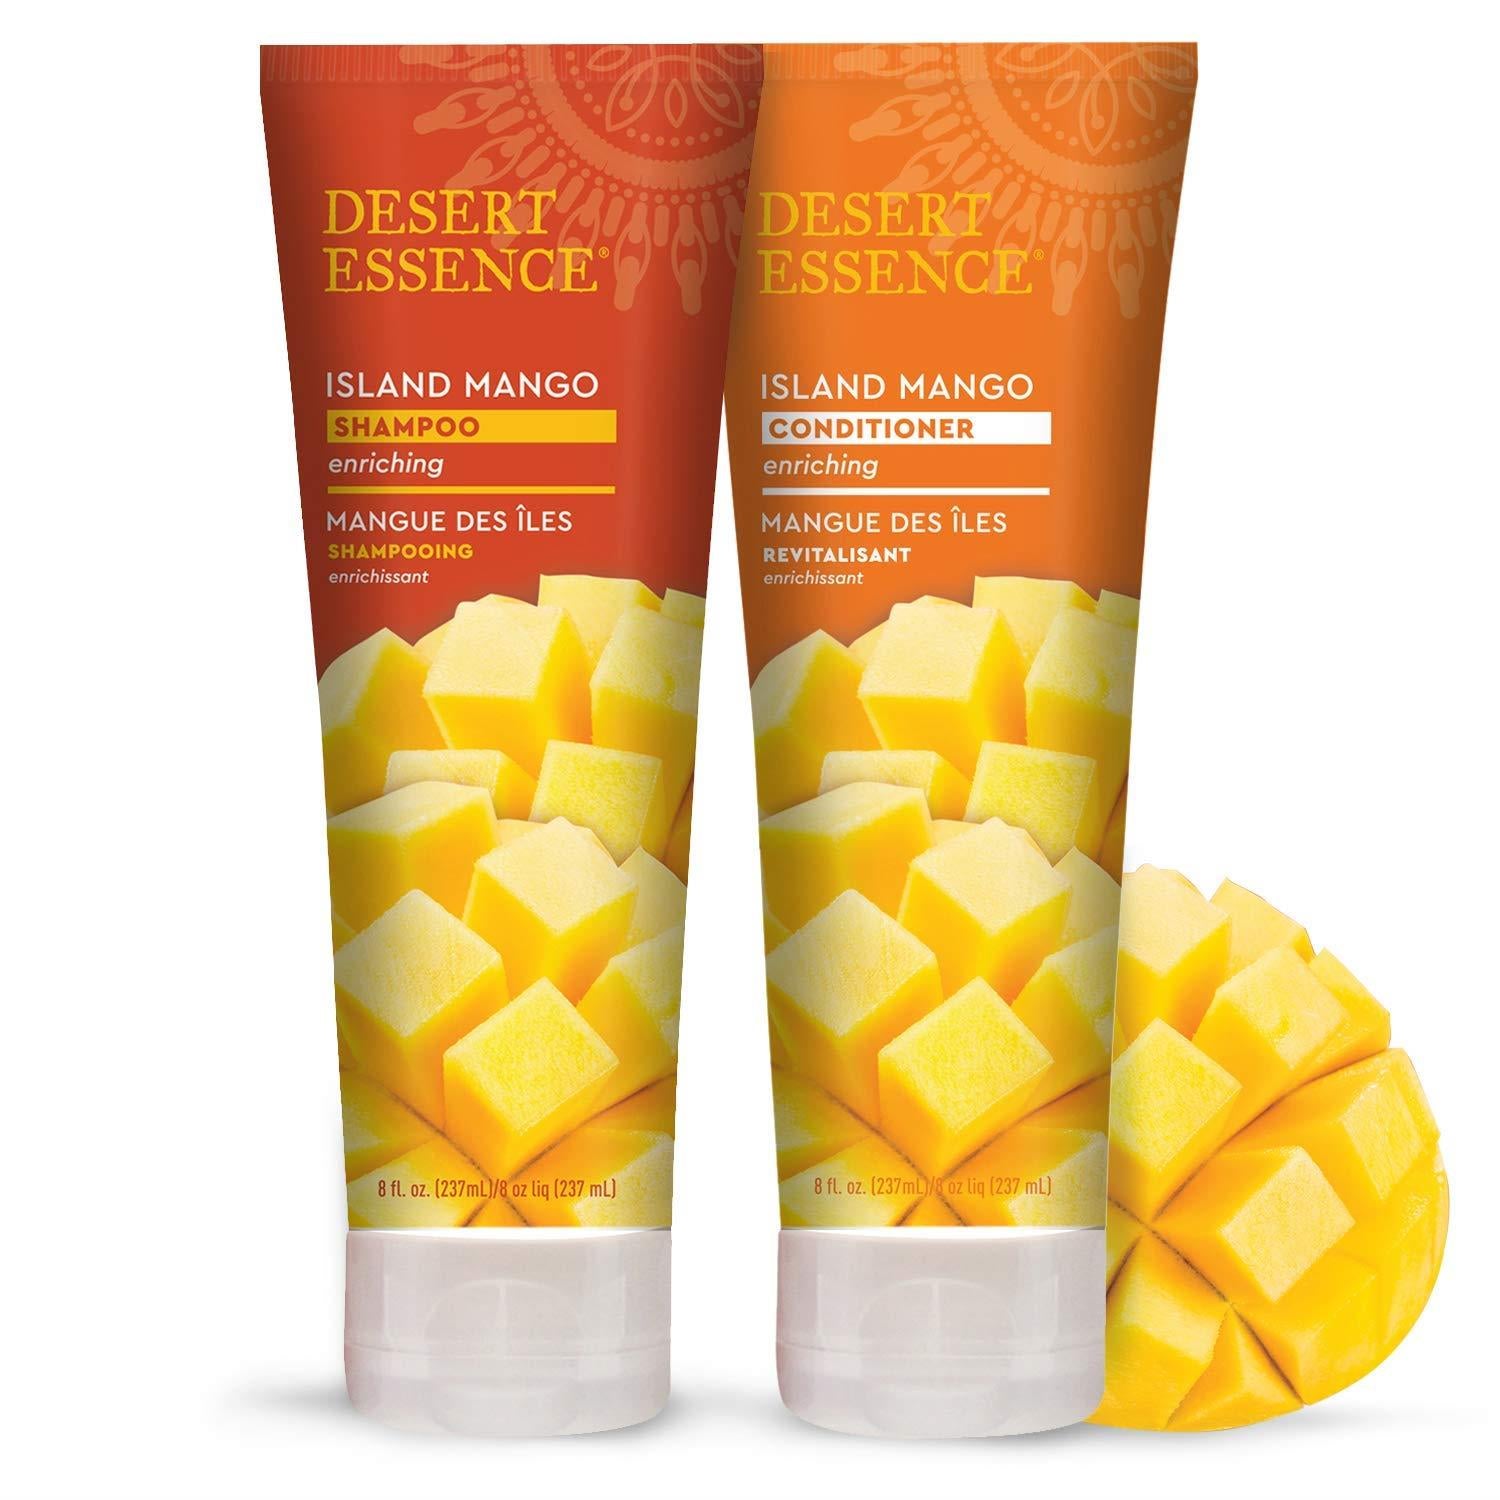 Desert Essence Island Mango Shampoo & Conditioner Bundle - 8 Fl Ounce - Enriching - Shea Butter - Jojoba Oil - Smooth & Silky - Soft & Healthy